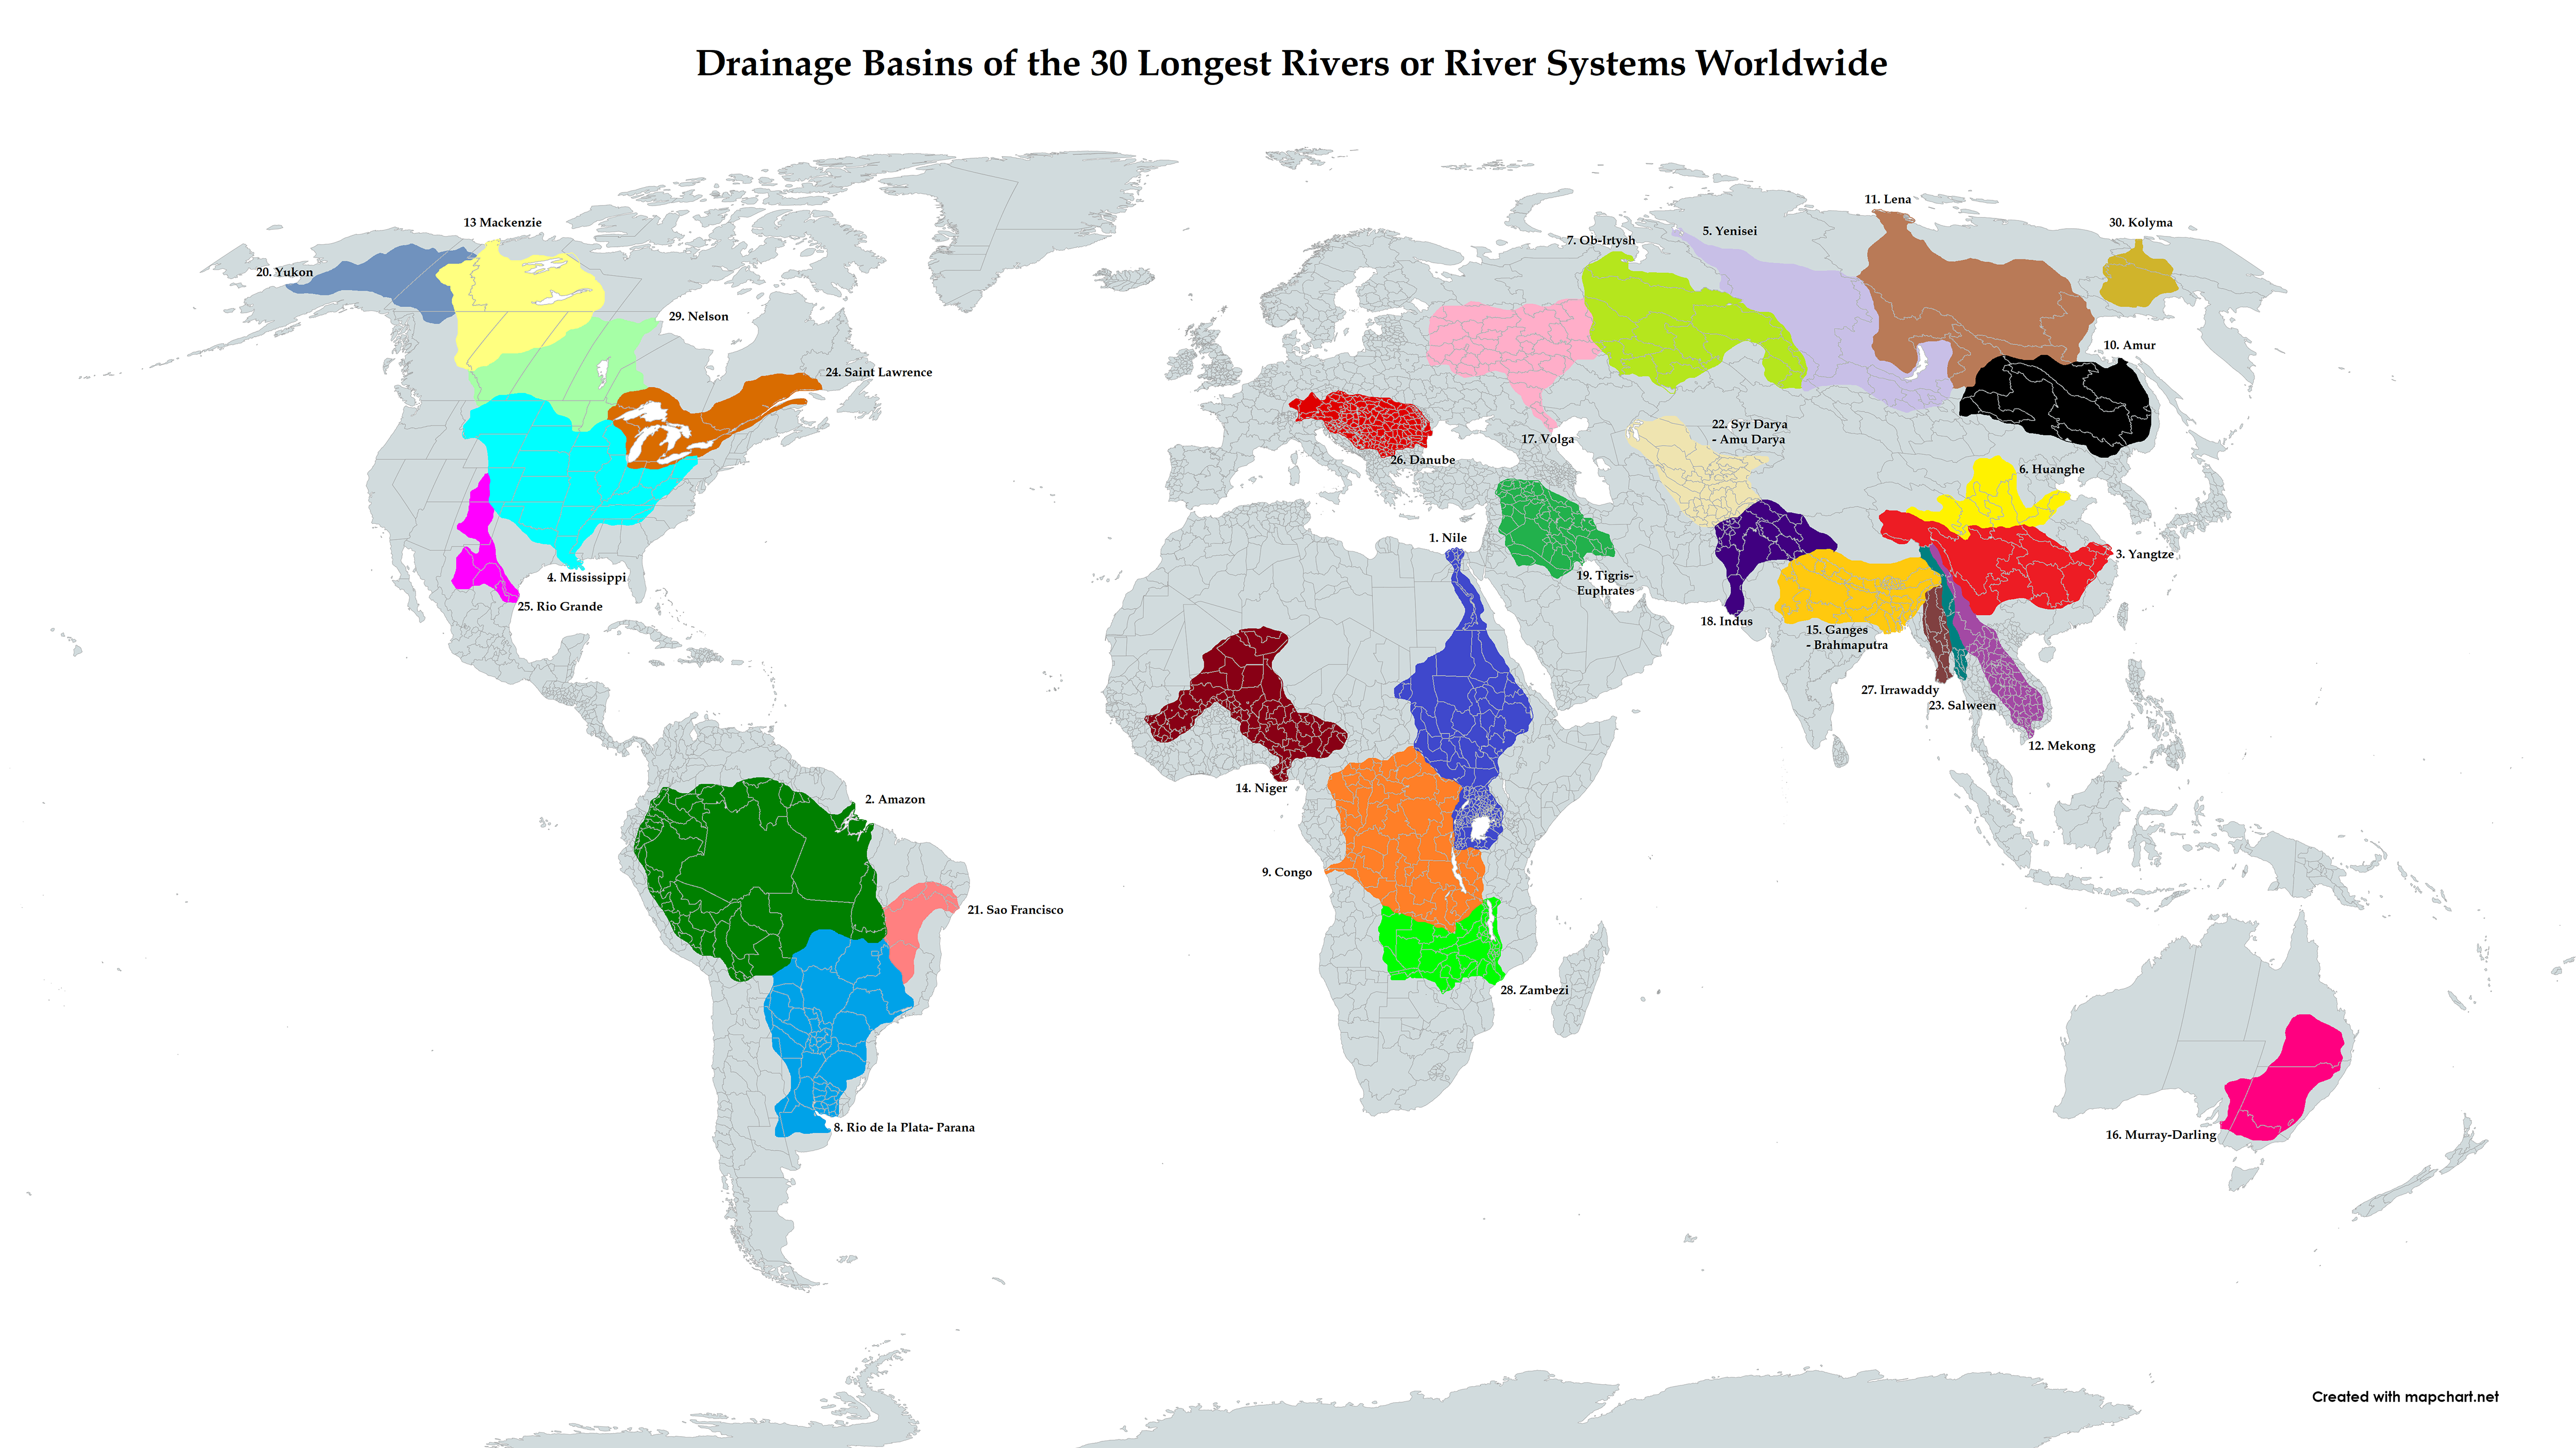 Drainage basins of the world's longest rivers